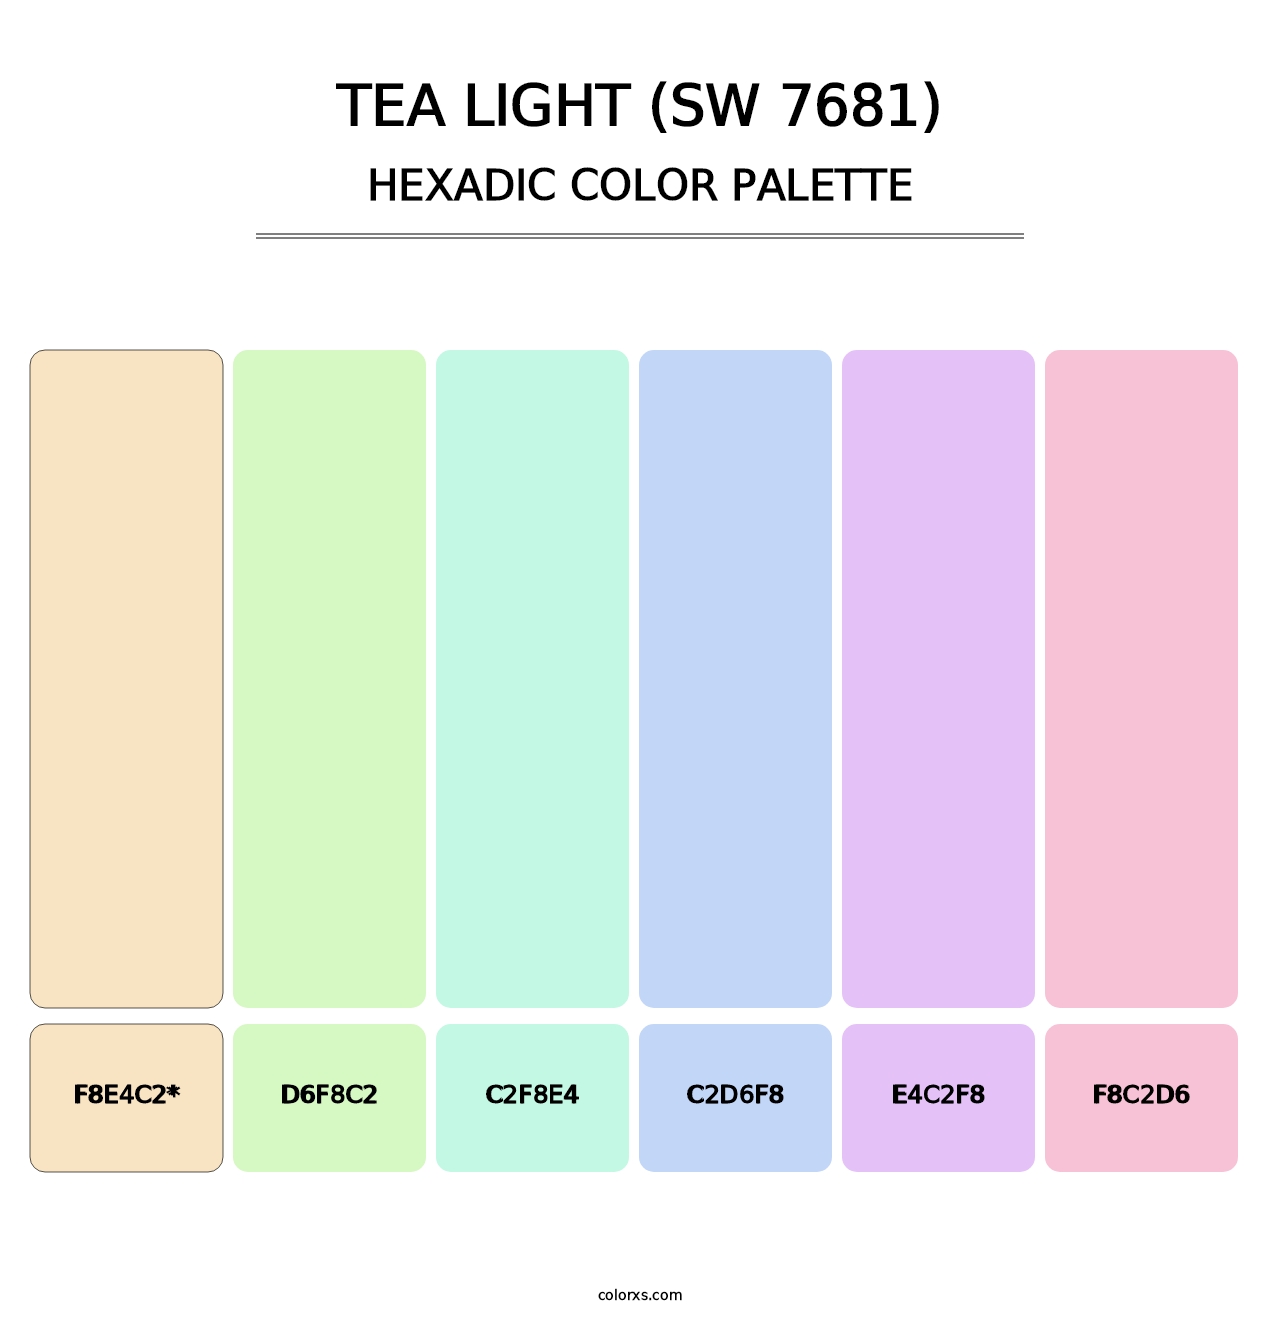 Tea Light (SW 7681) - Hexadic Color Palette